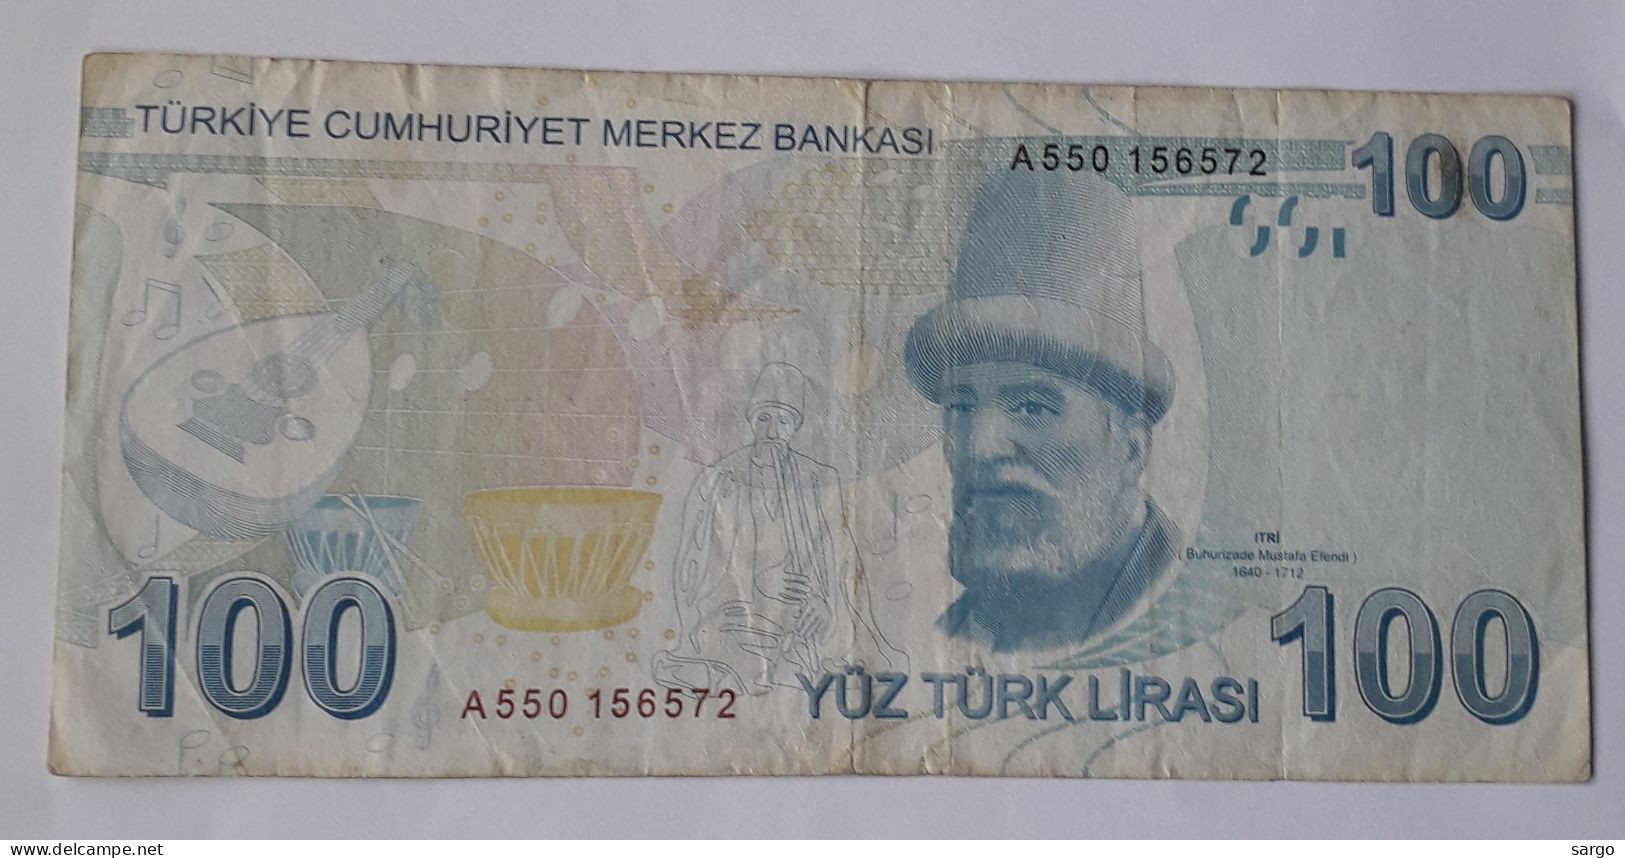 TURKEY - 100 LIRA -  P 226 - 2009/2022 - CIRC - BANKNOTES - PAPER MONEY - CARTAMONETA - - Turchia